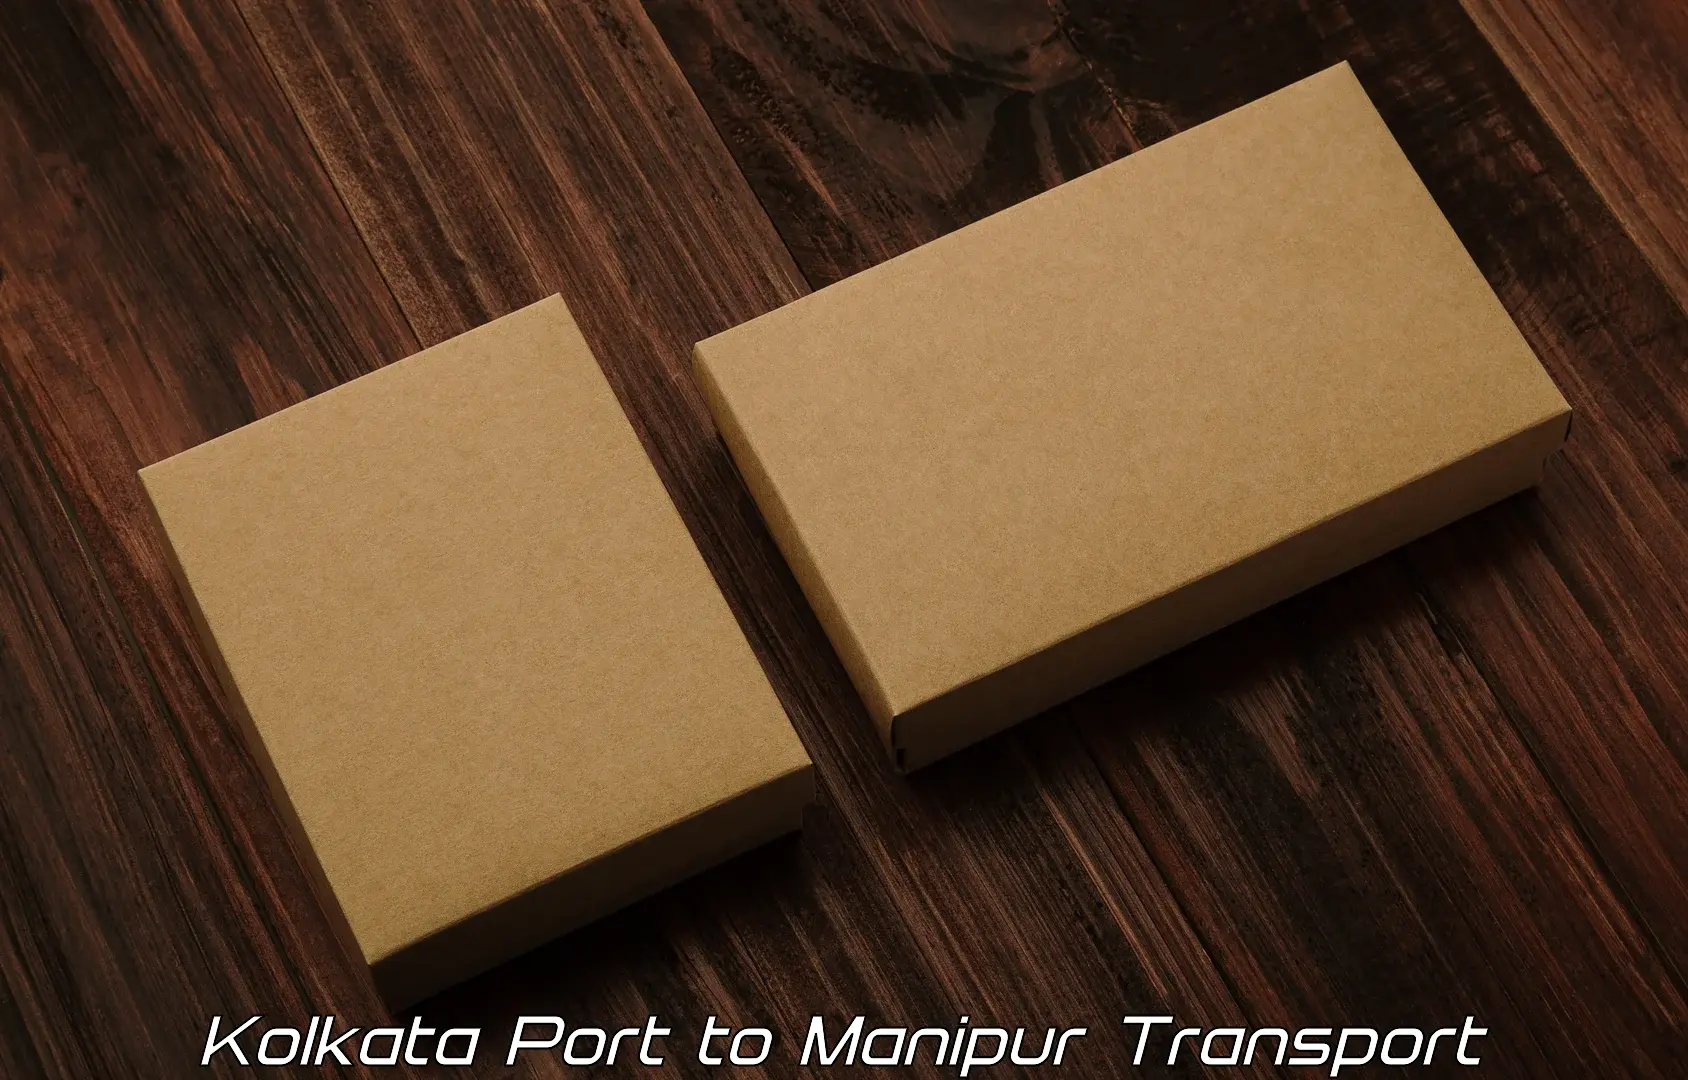 Truck transport companies in India in Kolkata Port to Manipur